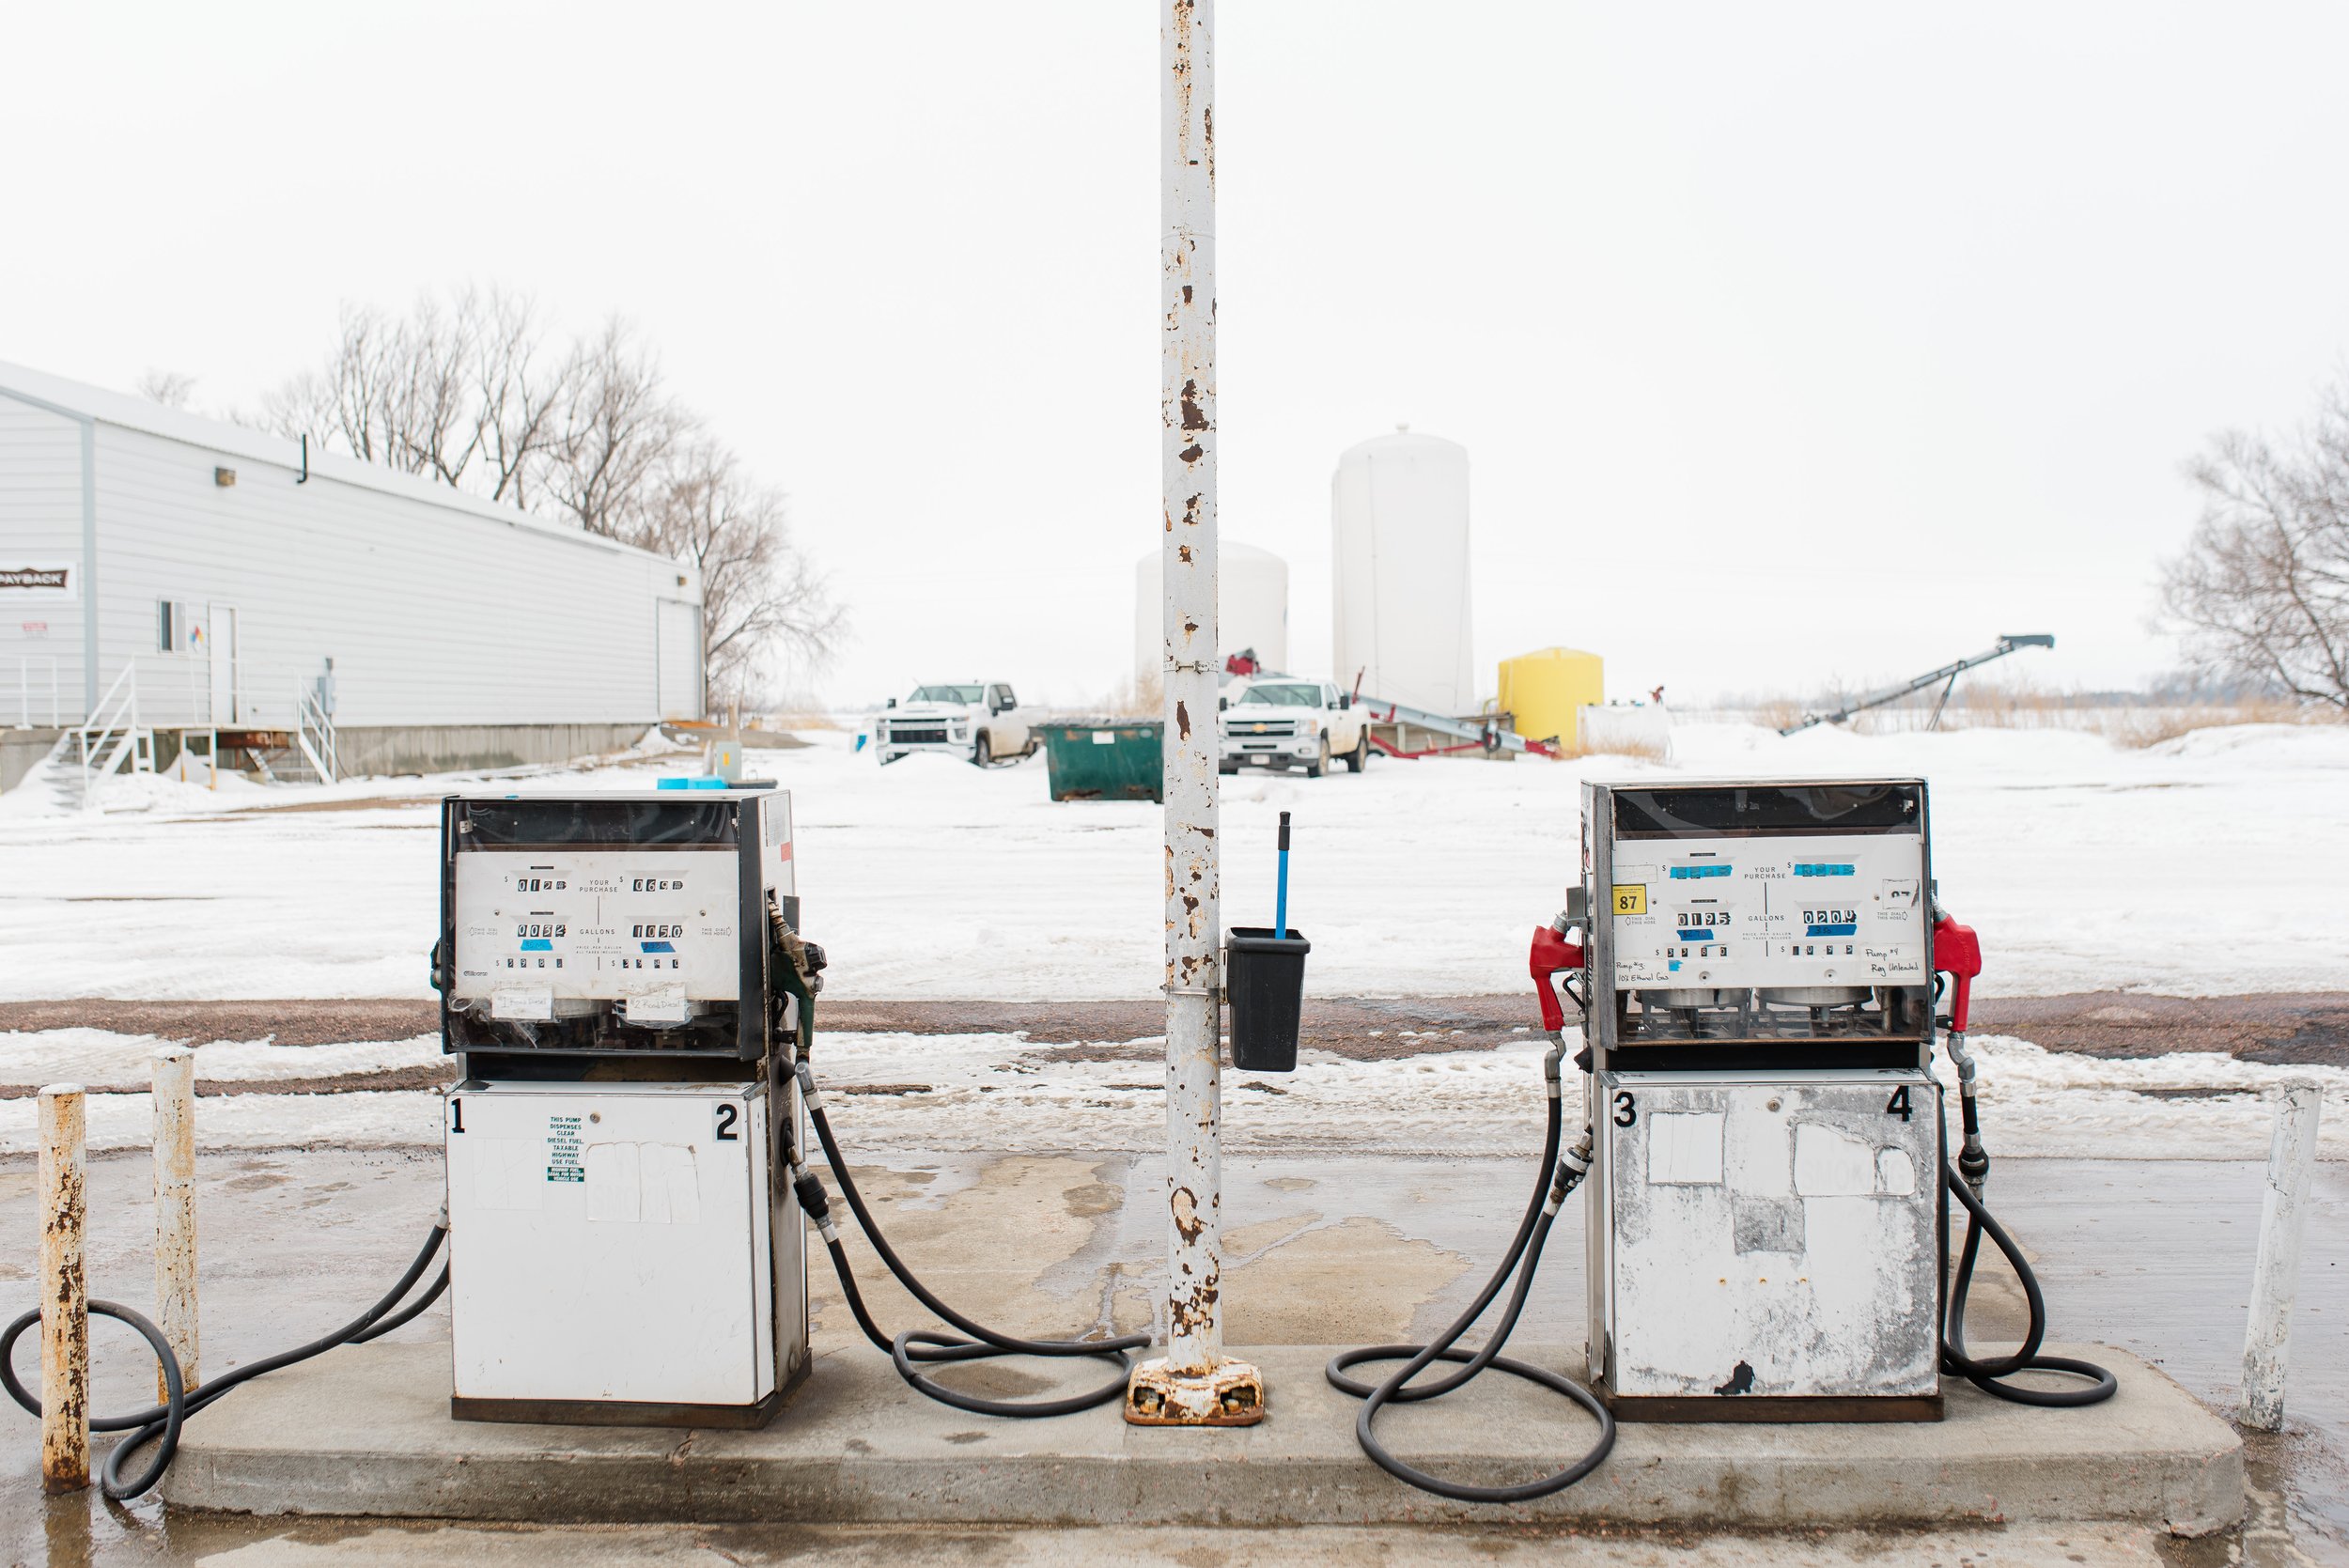 Two old gas pumps in Storla, South Dakota